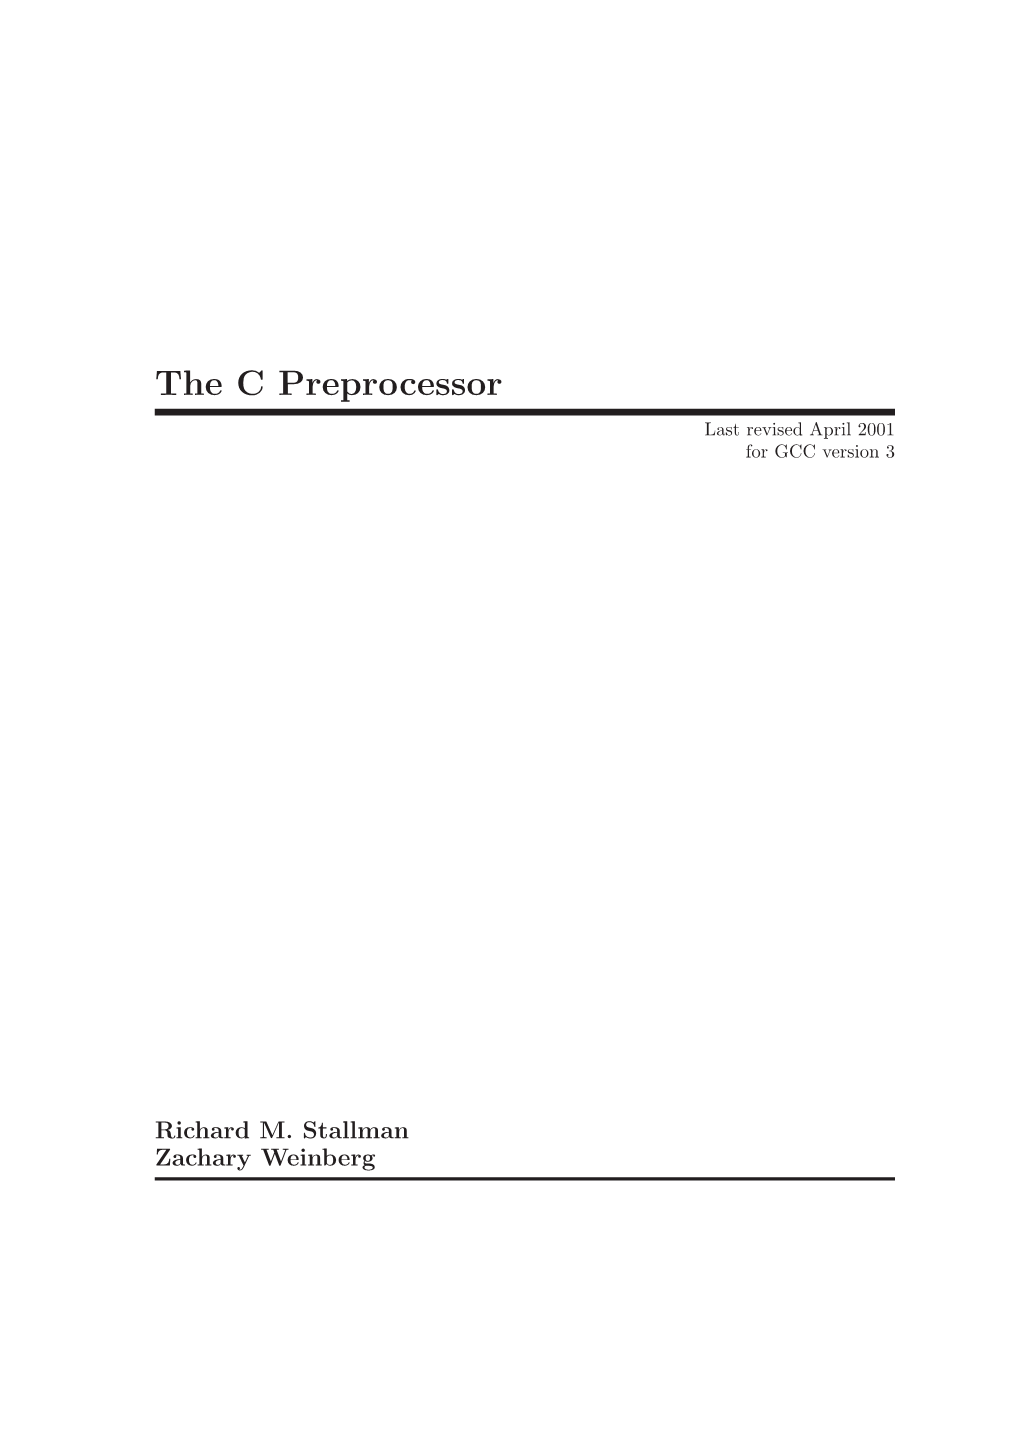 The C Preprocessor Last Revised April 2001 for GCC Version 3